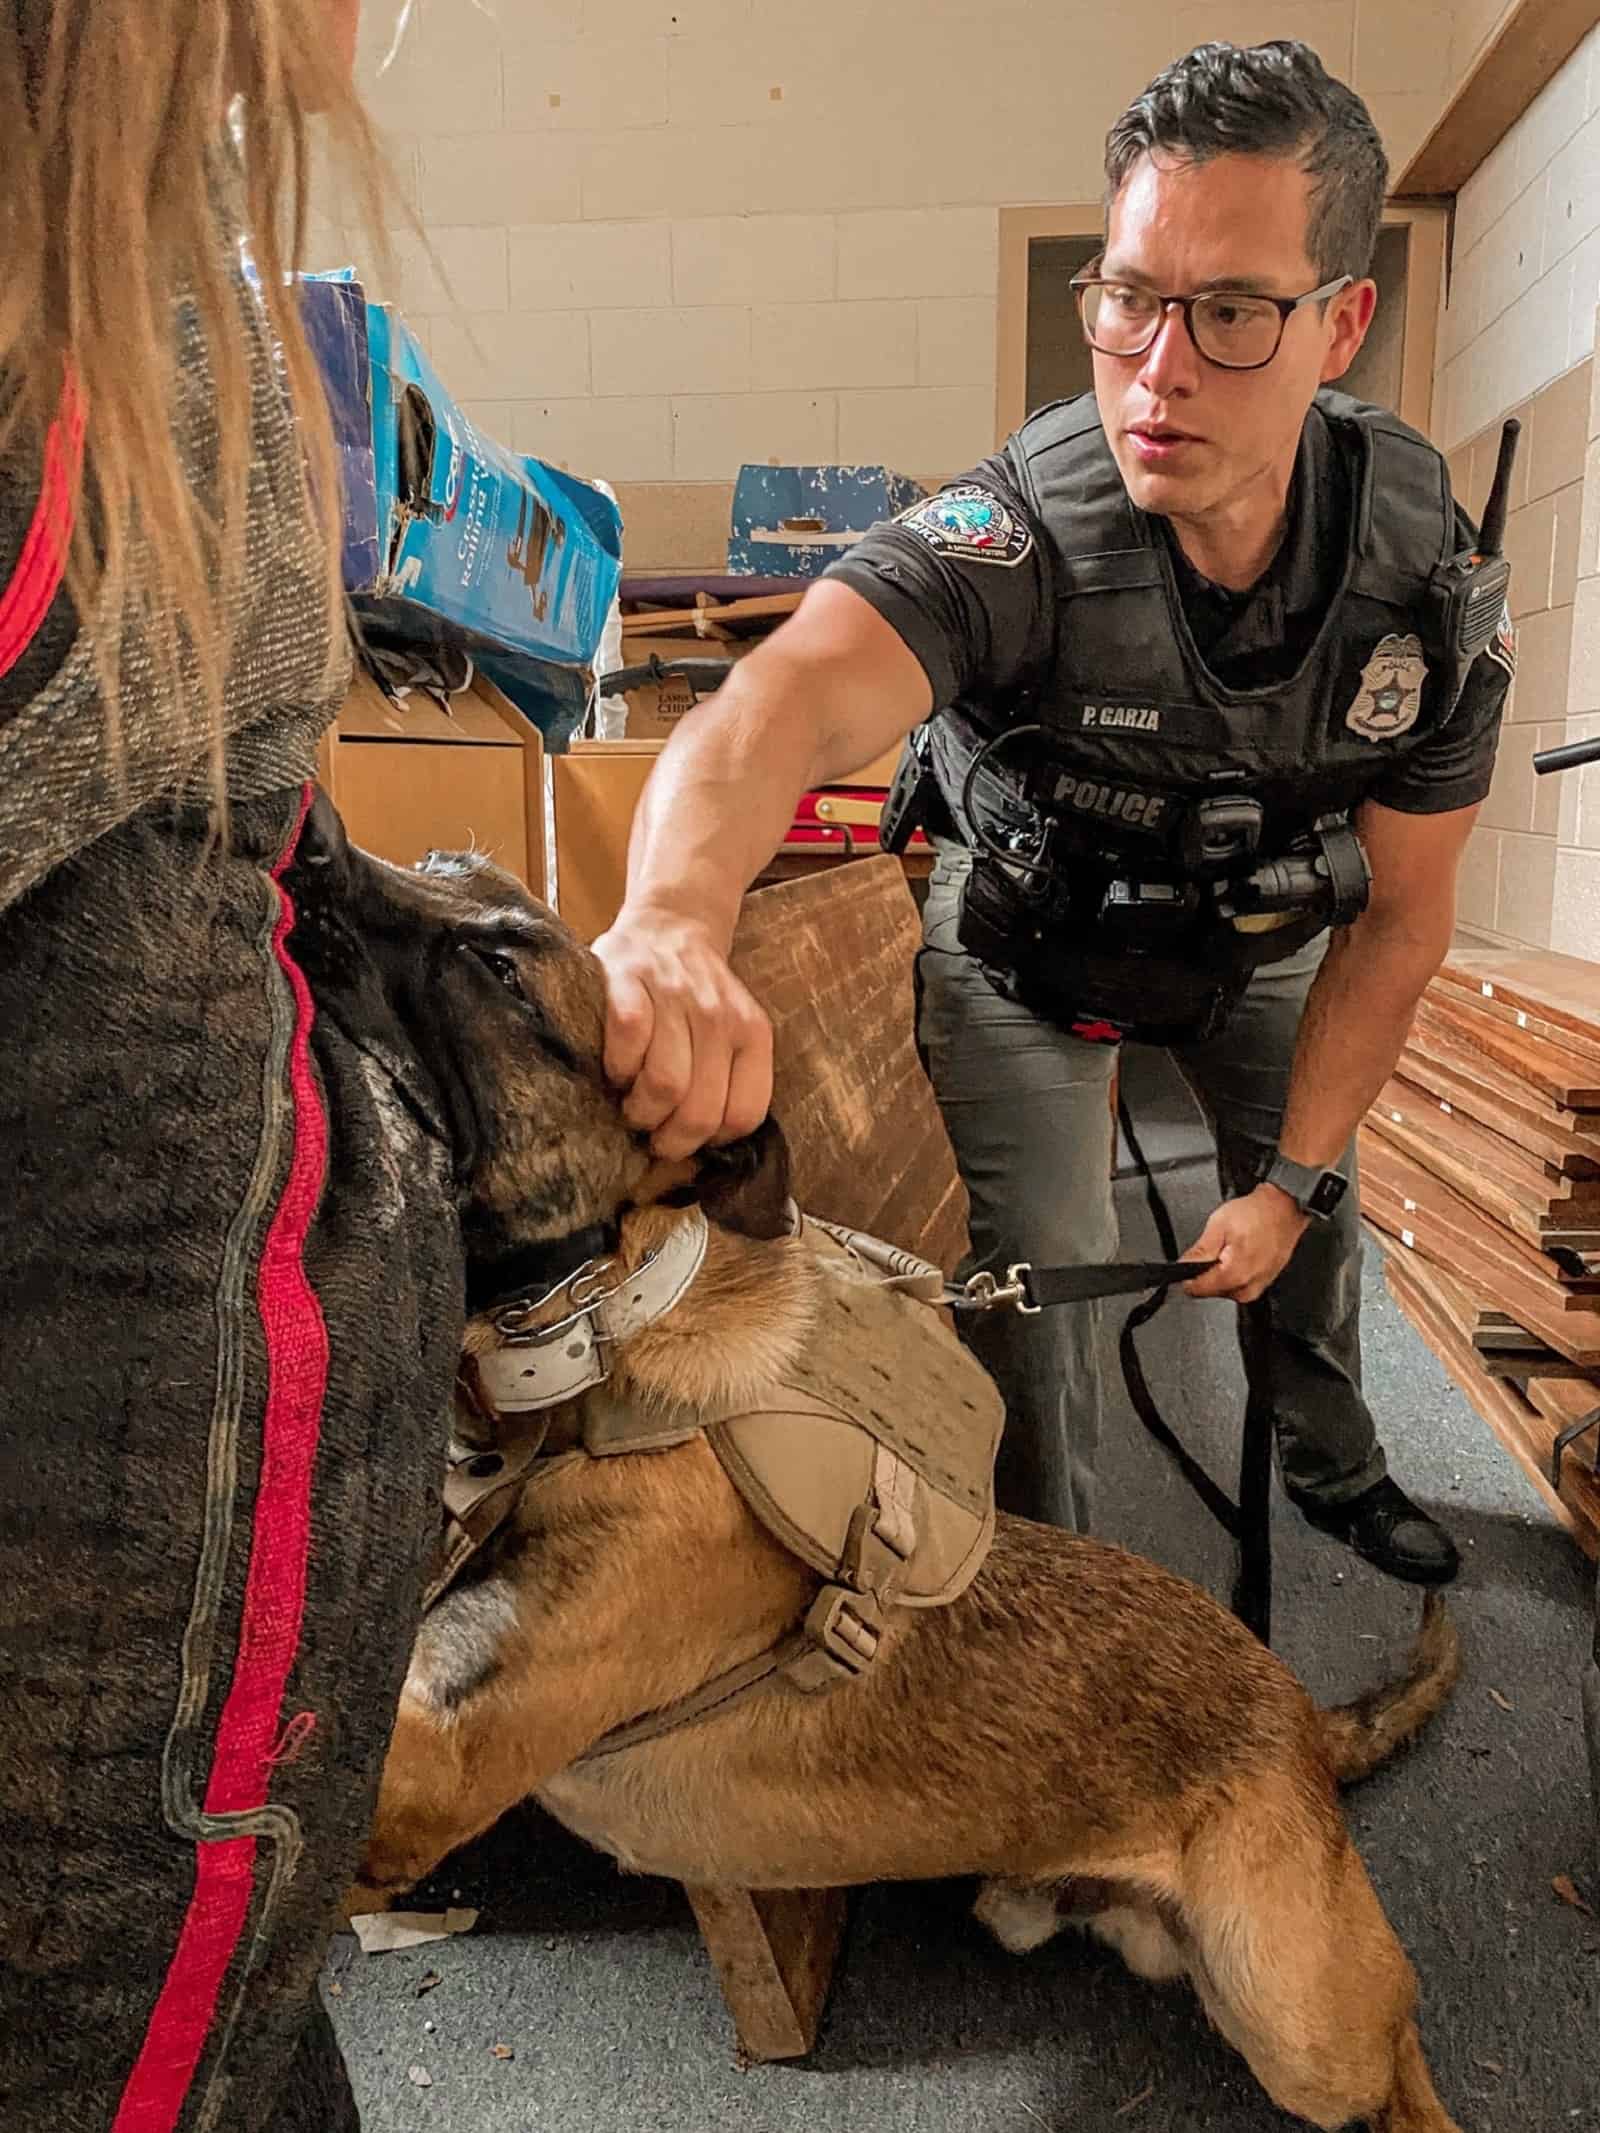 police man holding police dog on a leash